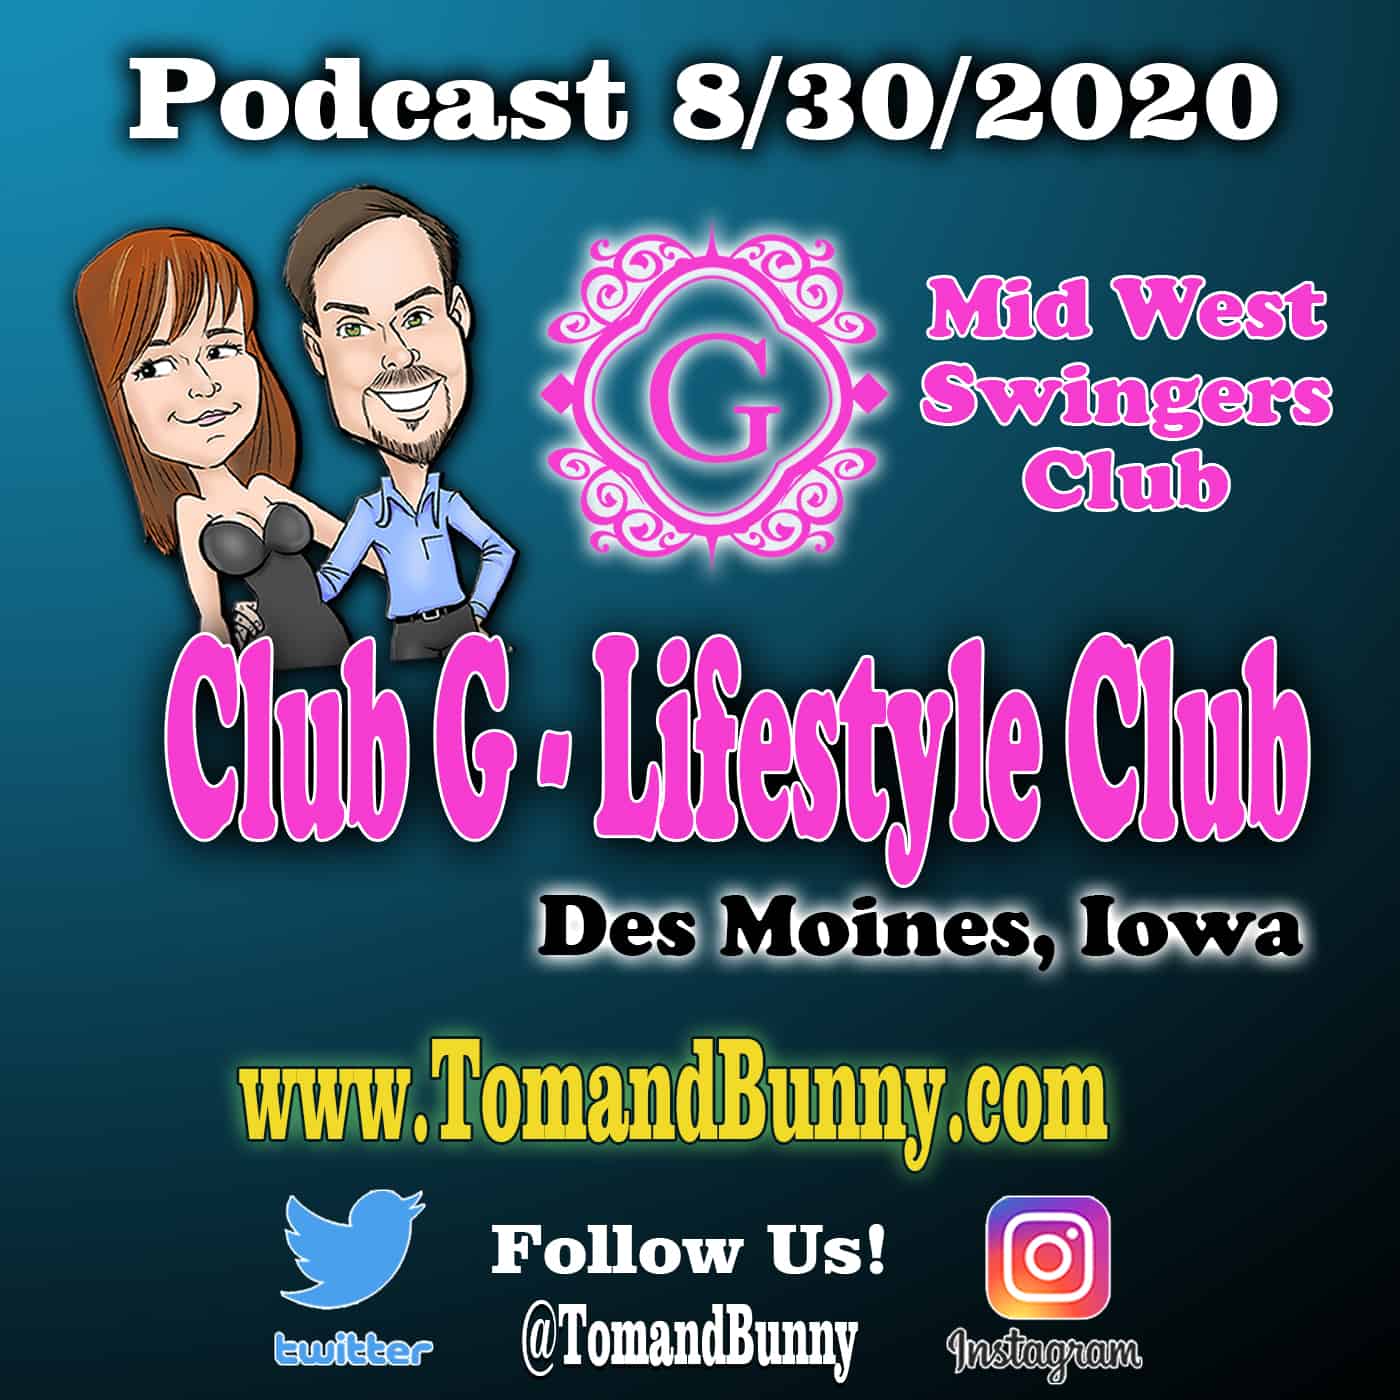 Club G Lifestyle Club Des Moines Iowa picture